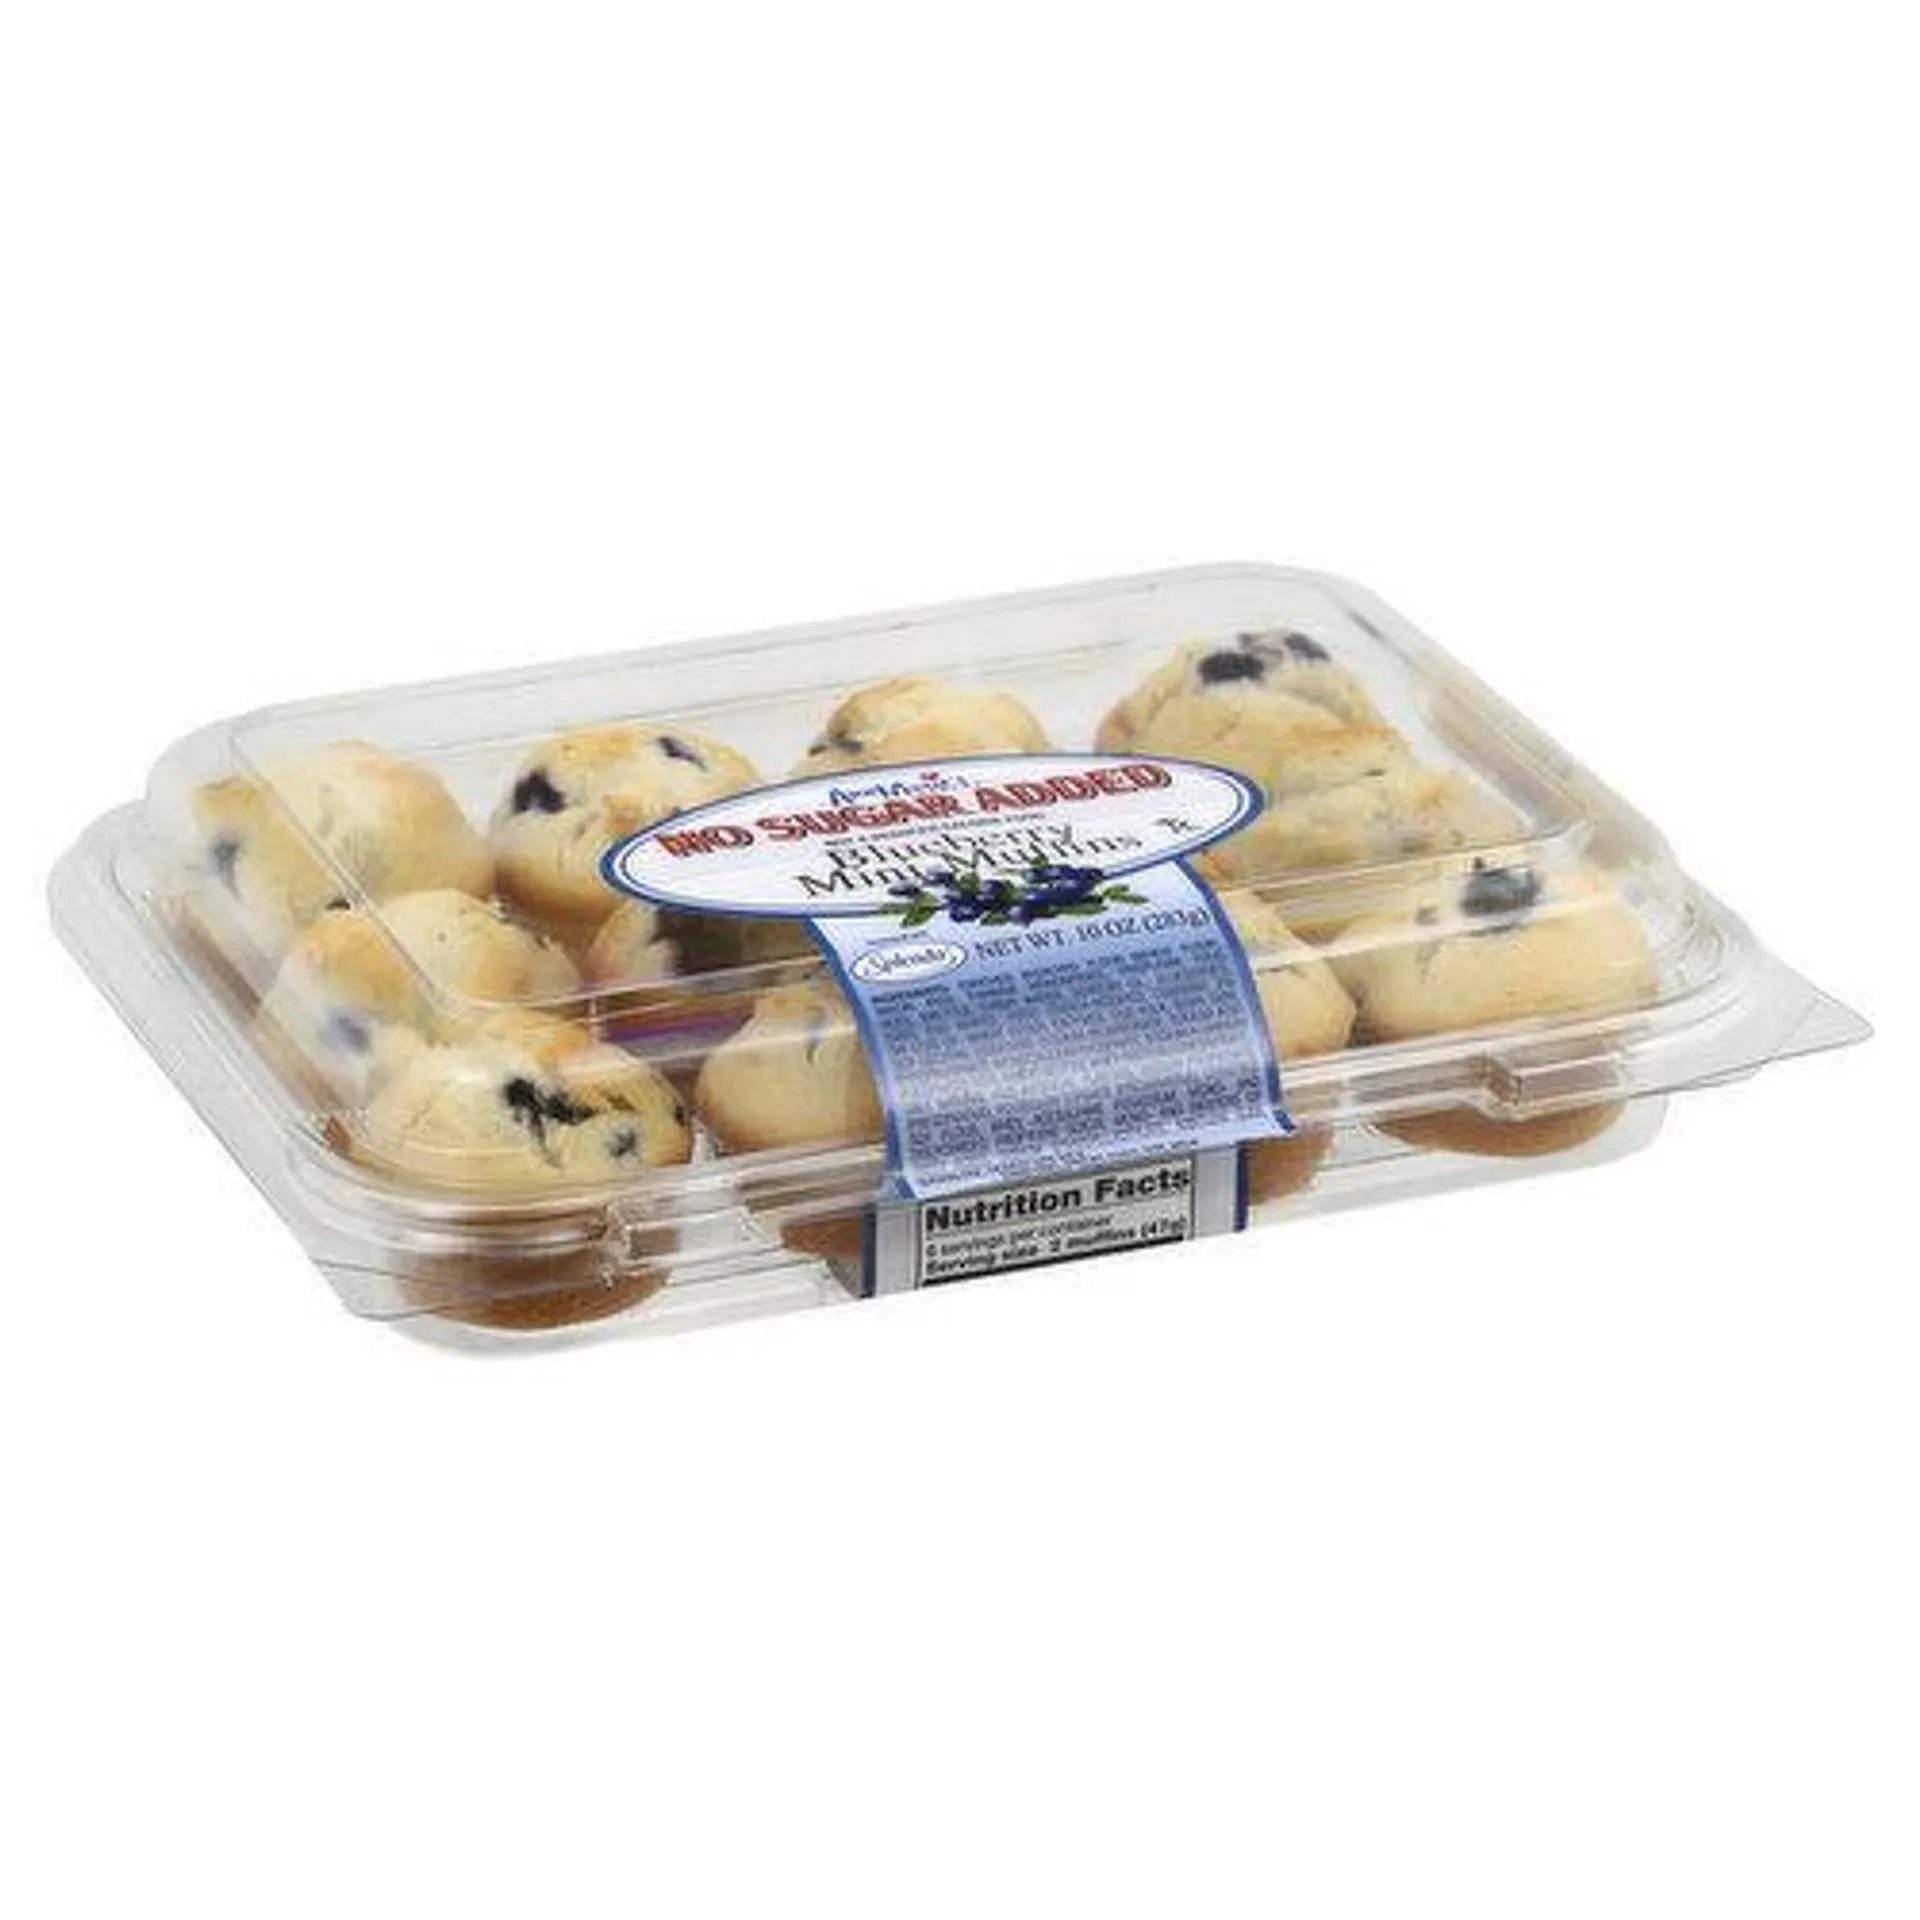 Ann Marie's Mini Muffins, No Sugar Added, Blueberry - 10 Ounce